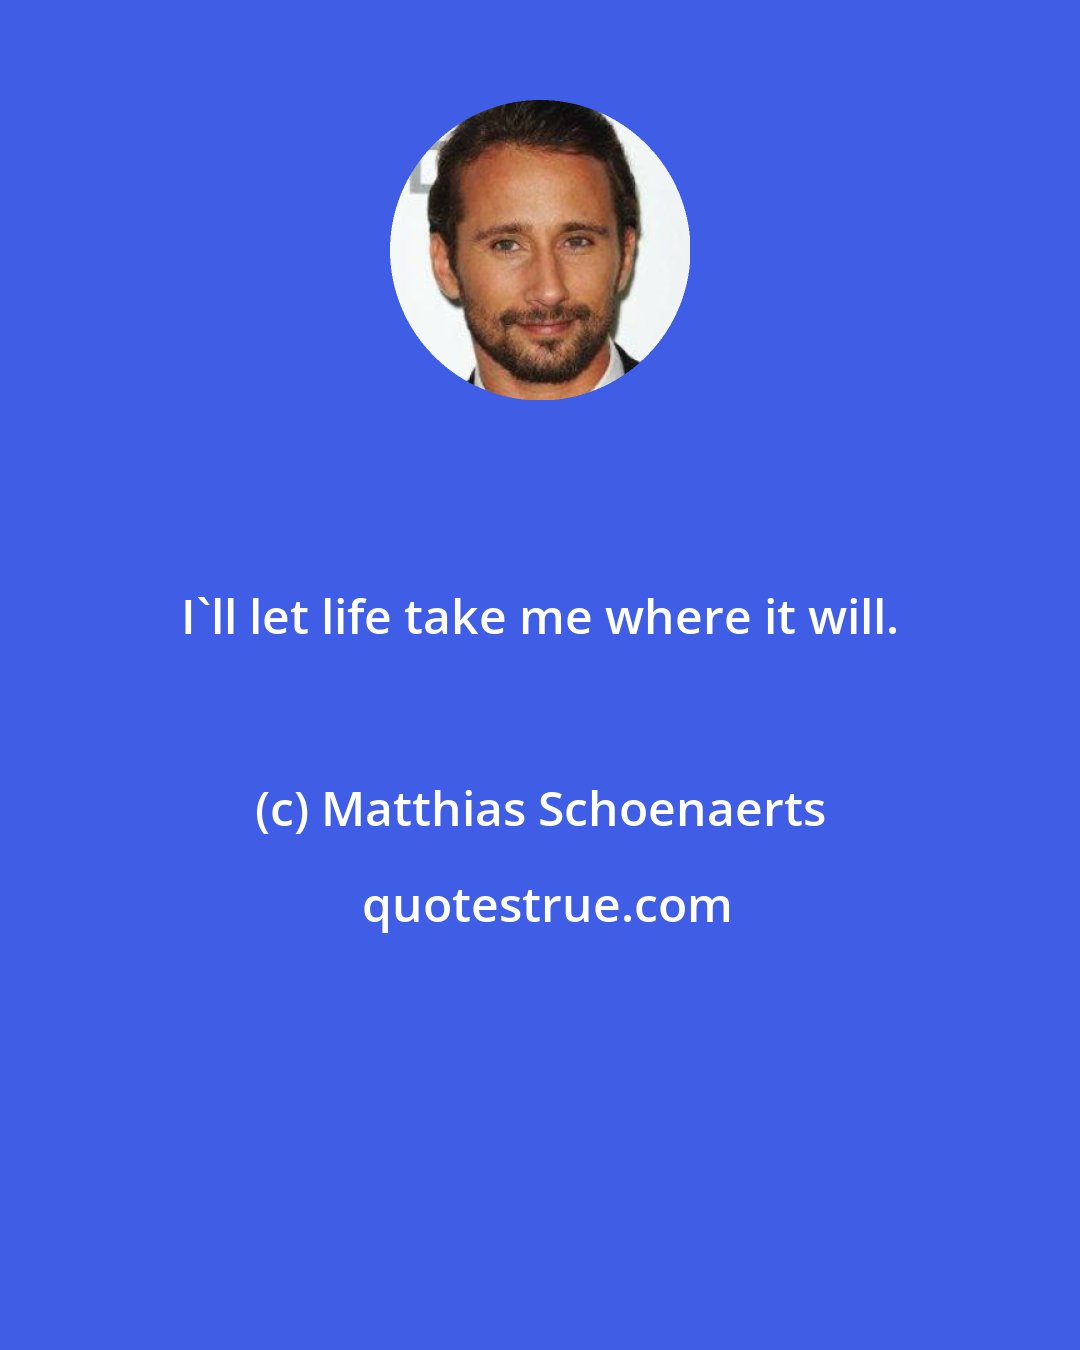 Matthias Schoenaerts: I'll let life take me where it will.